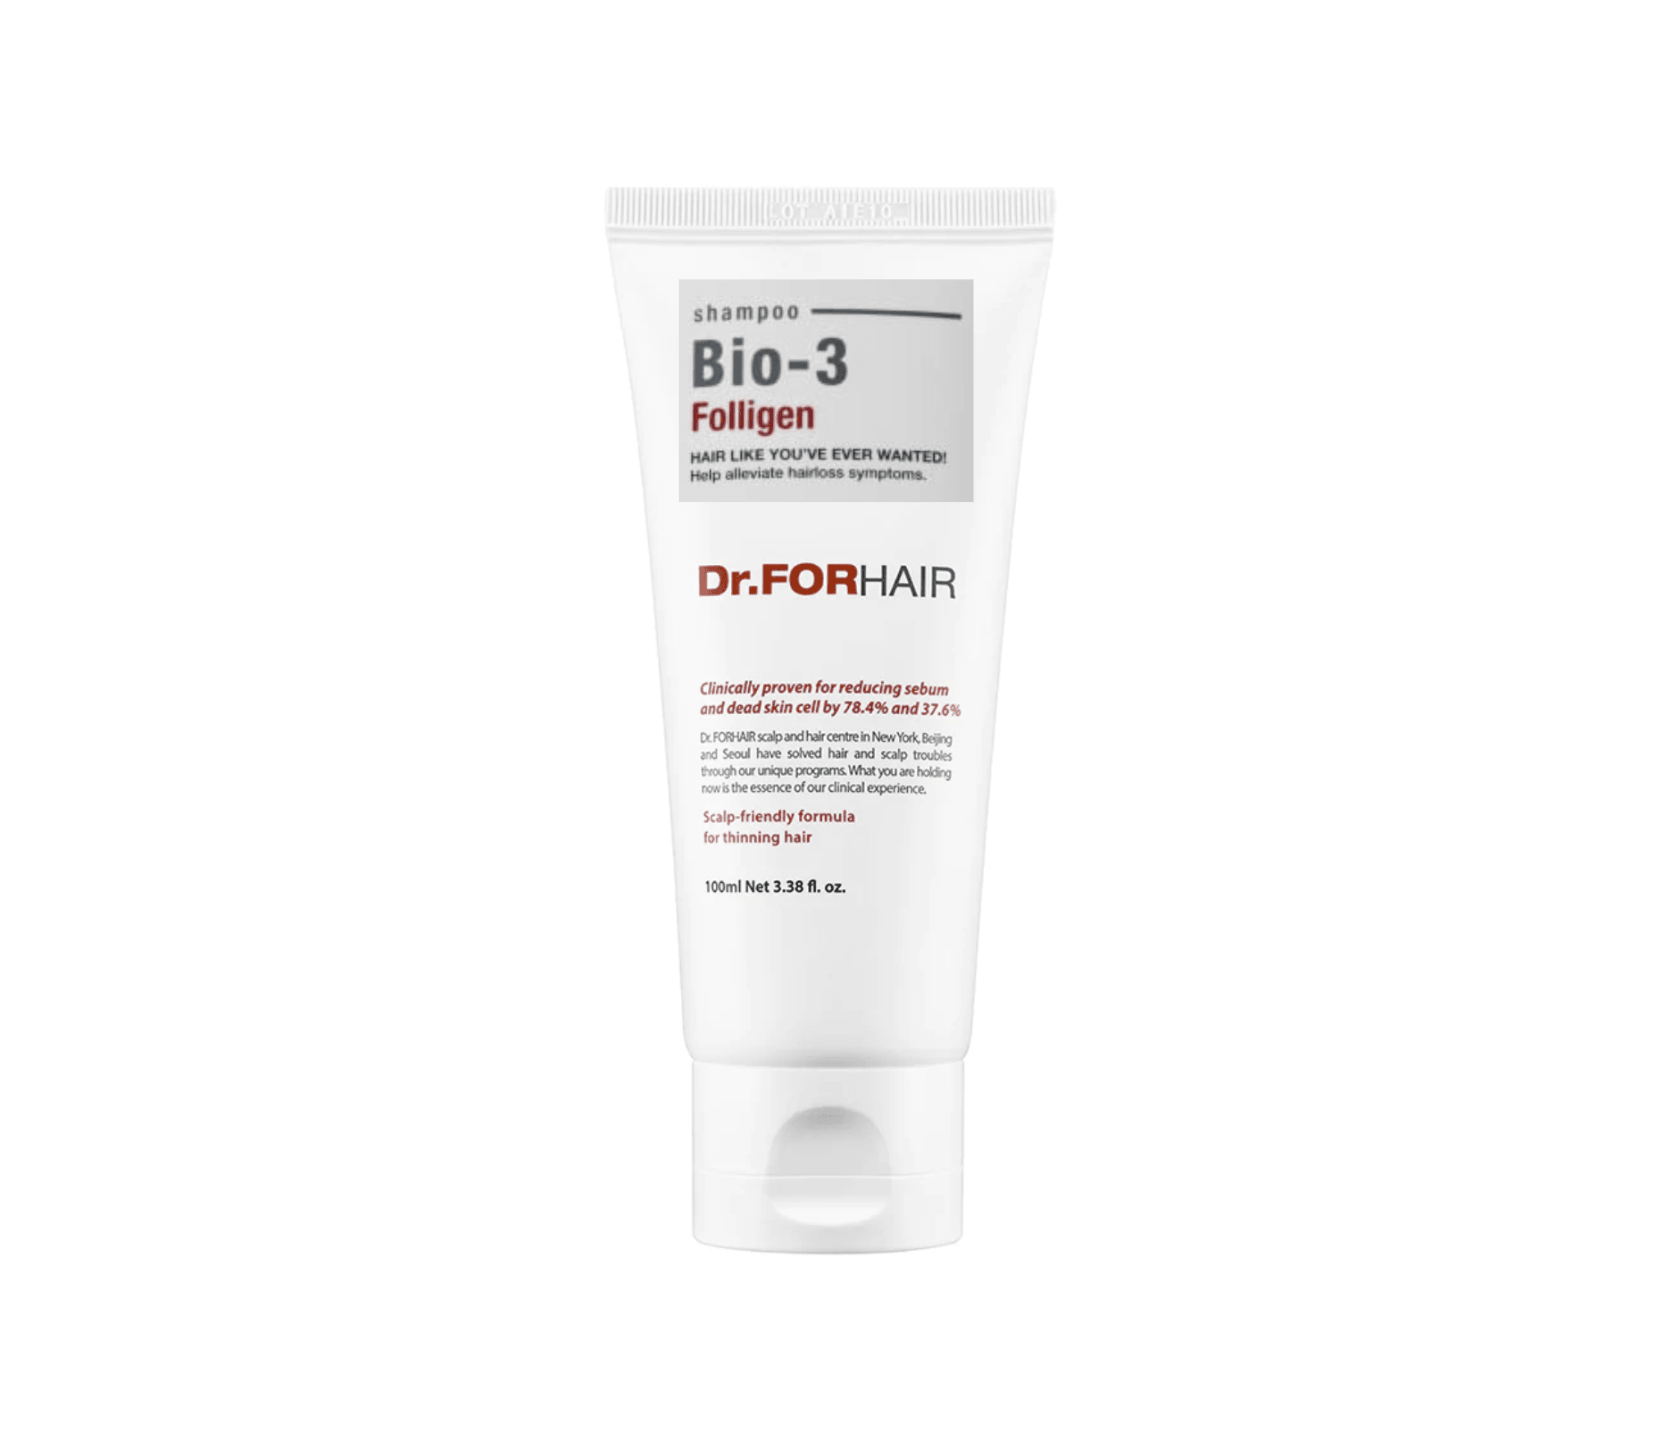 Bio-3 Folligen Biotin Shampoo - 70ml - Dermafirm USA